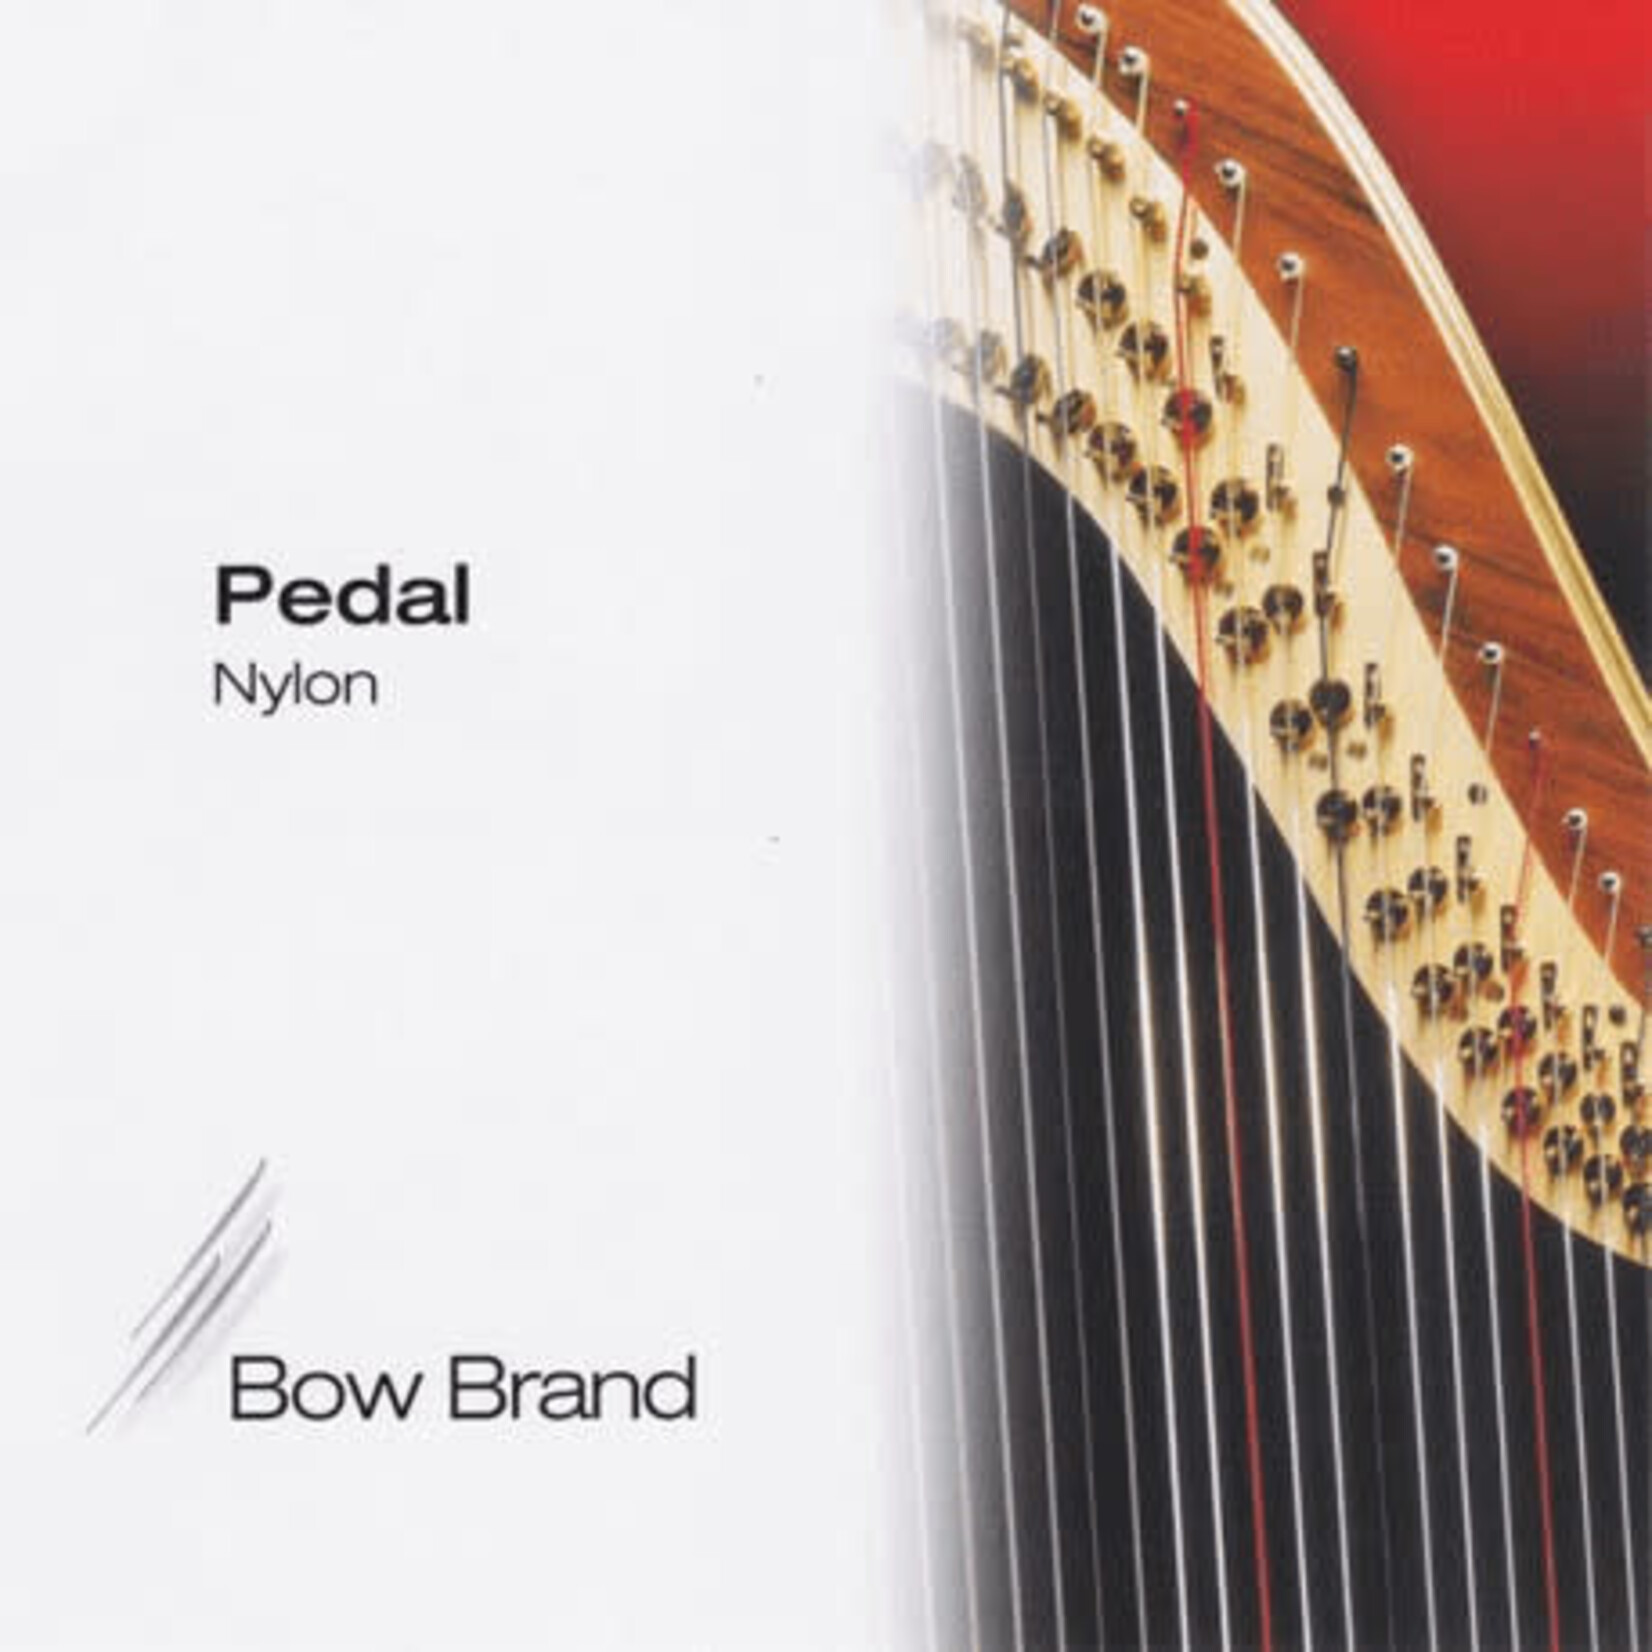 BOW BRAND pedaal nylon - pedal NYLON (set) - 3de octaaf - inclusief 5% korting